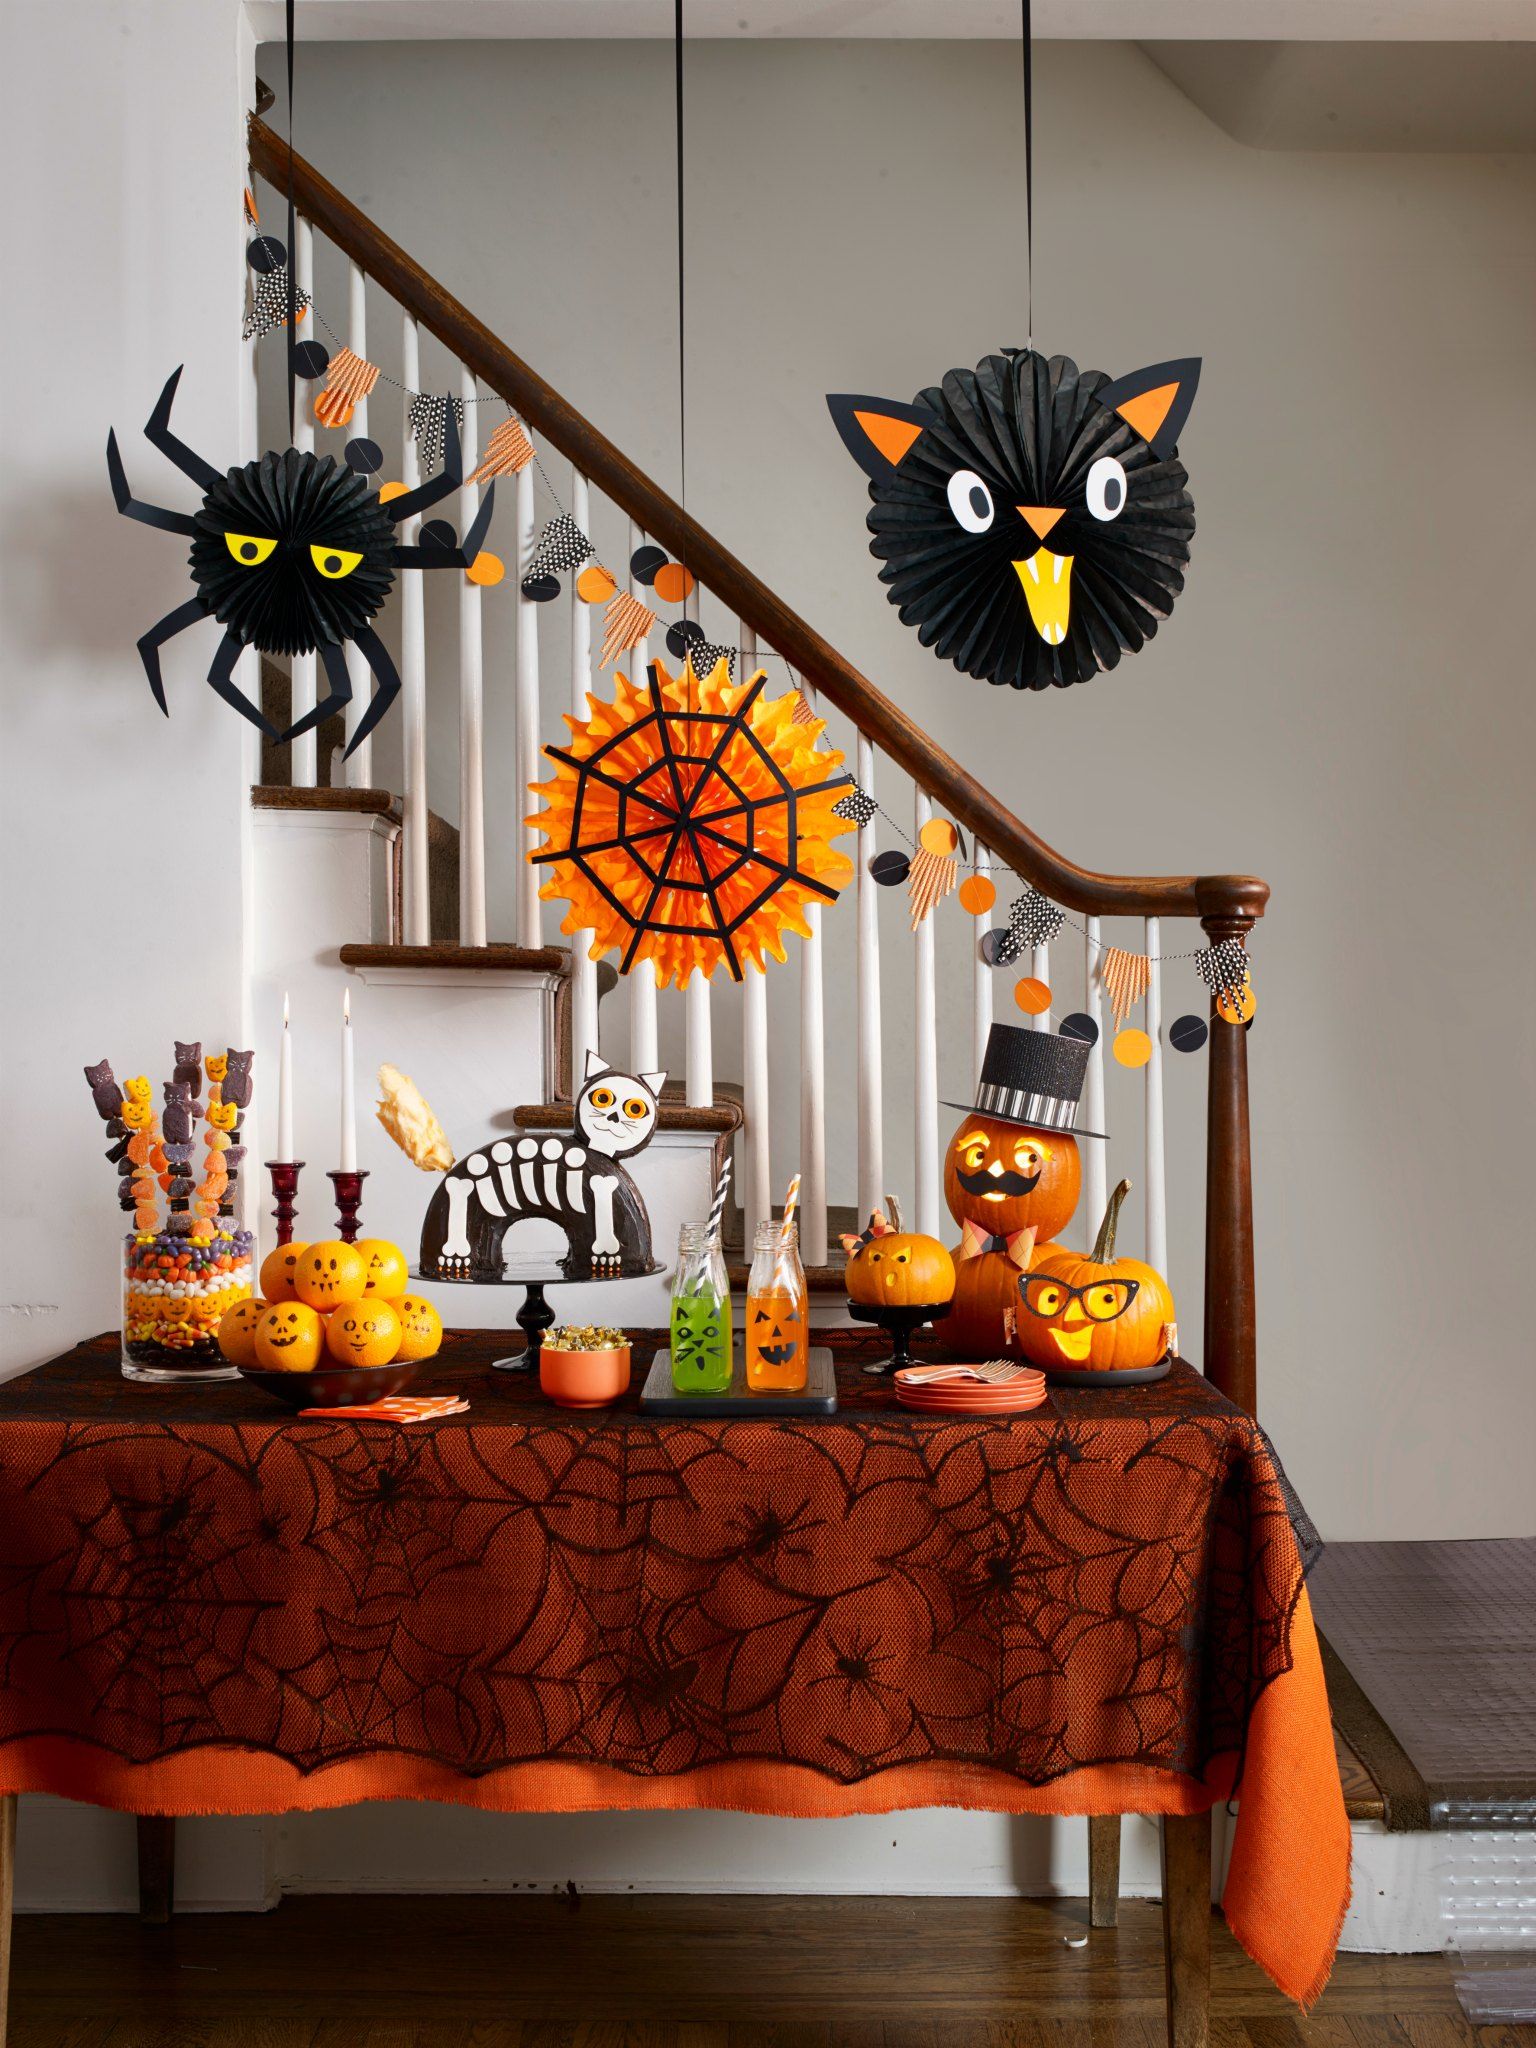 54 Easy Halloween Decorations Spooky Home Decor Ideas For